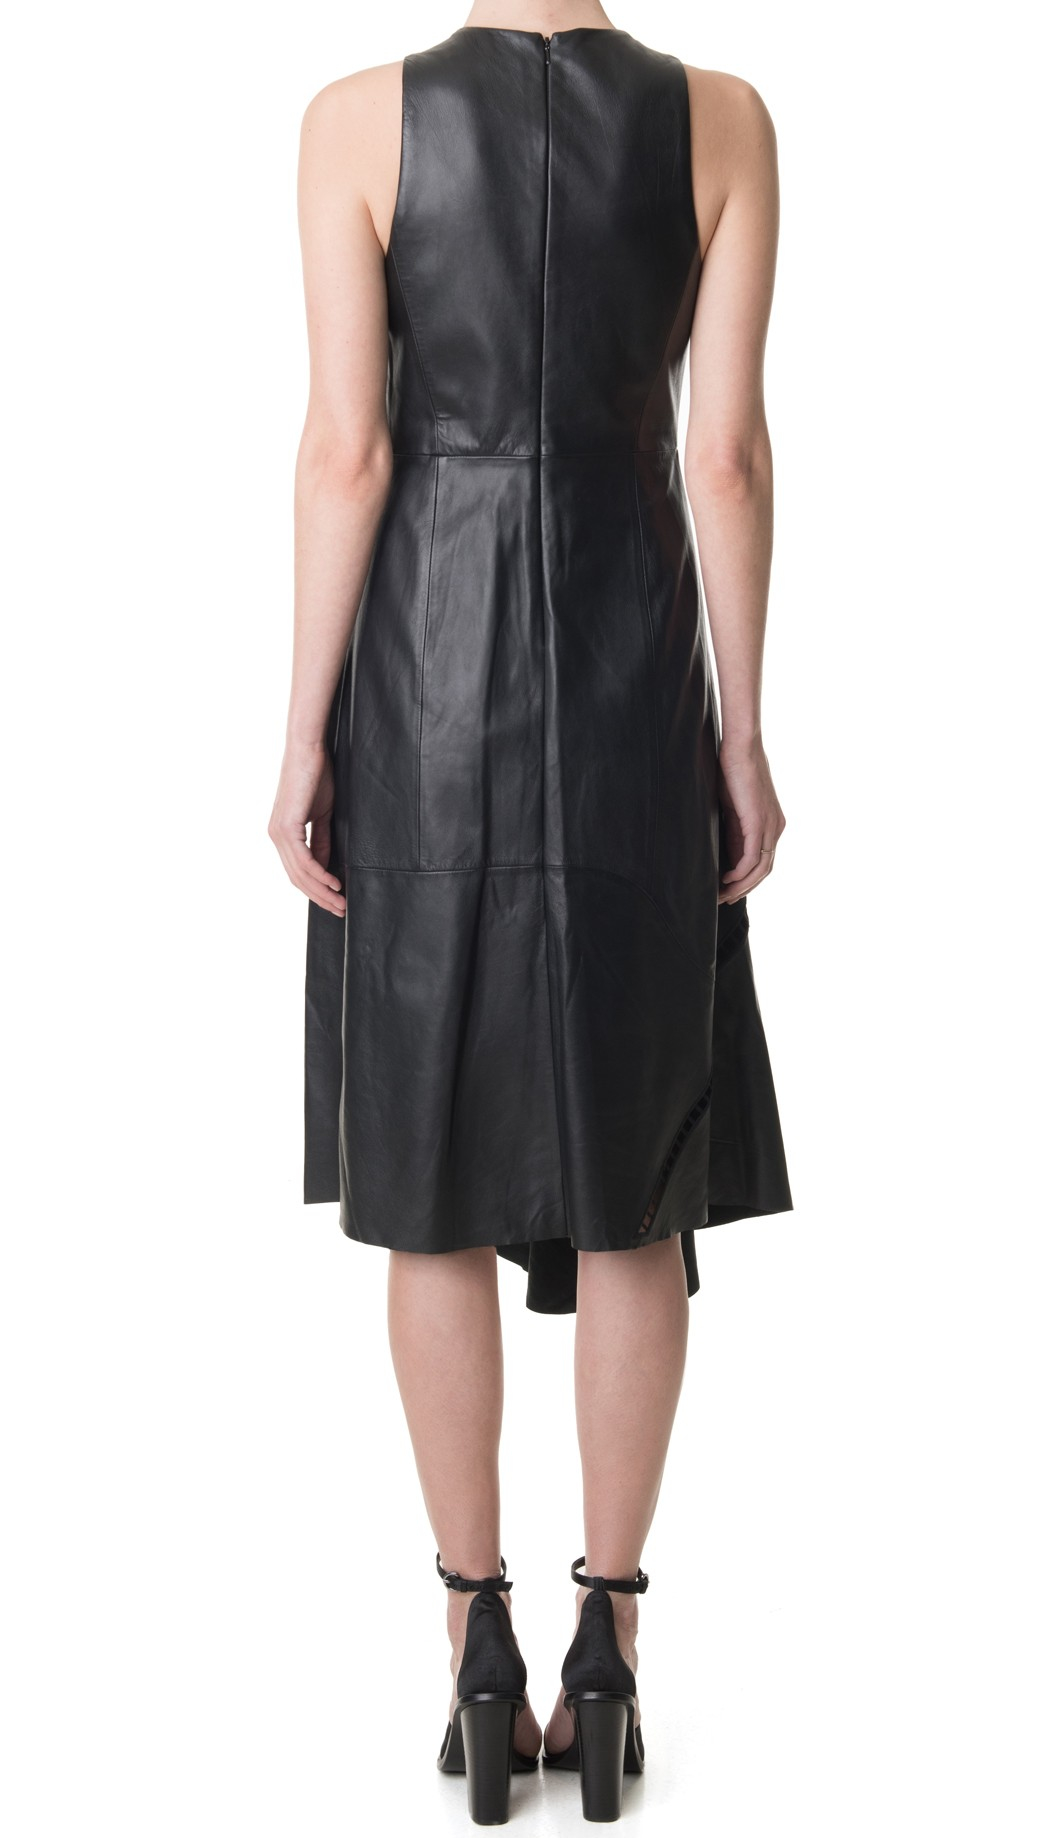 Lyst - Tibi Eska Cut Out Leather Seamed Drape Dress in Black